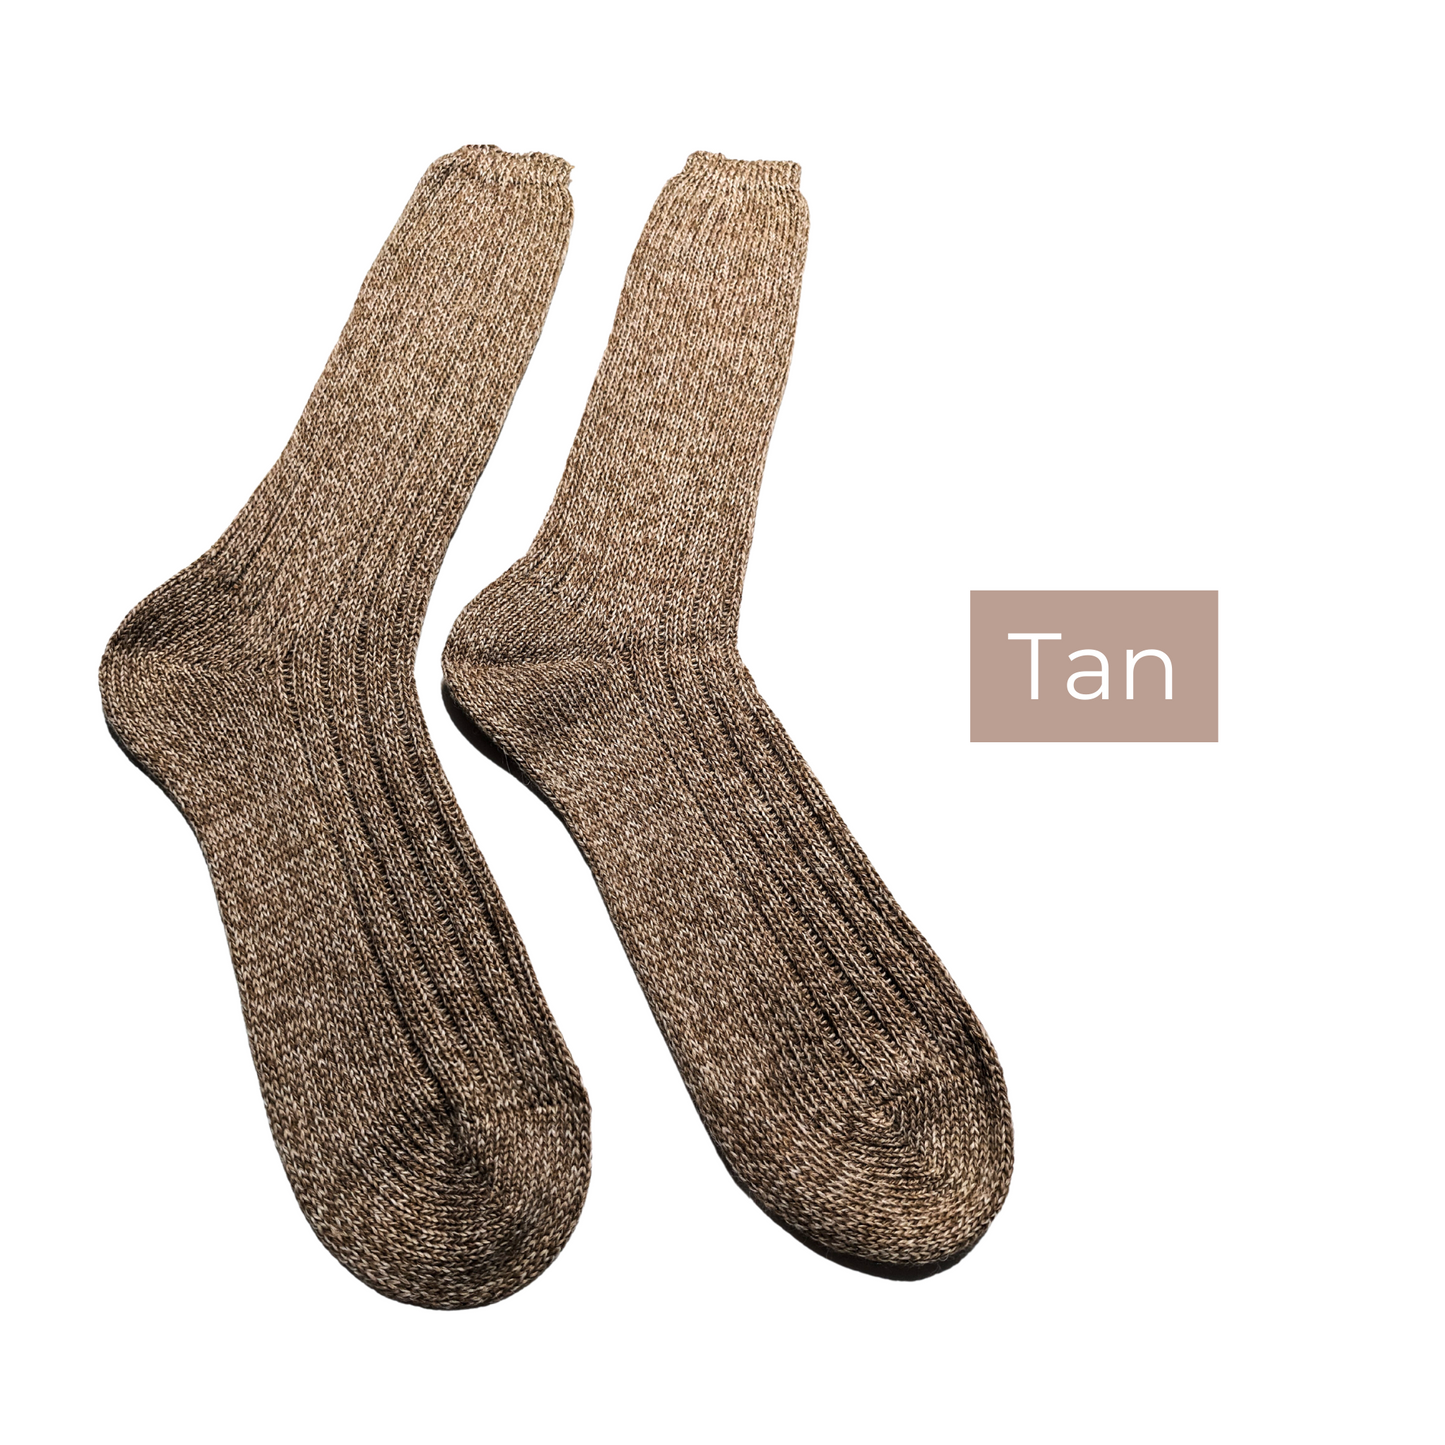 Alpaca Socks - Everyday Comfy